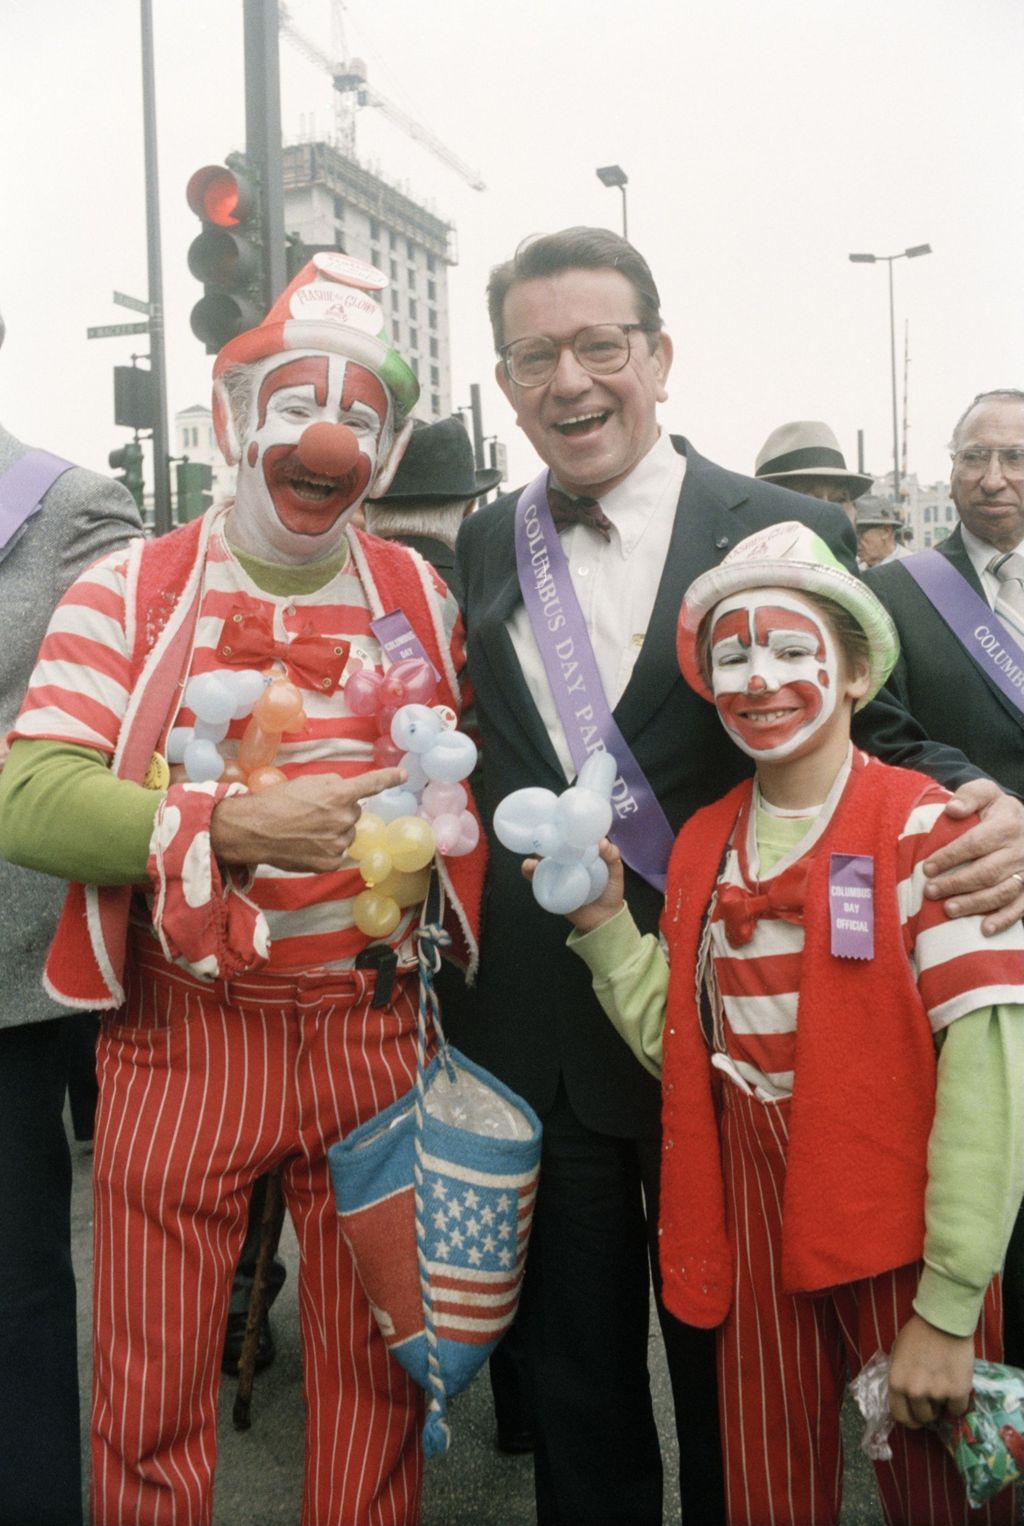 Flashy the Clown and Senator Paul Simon